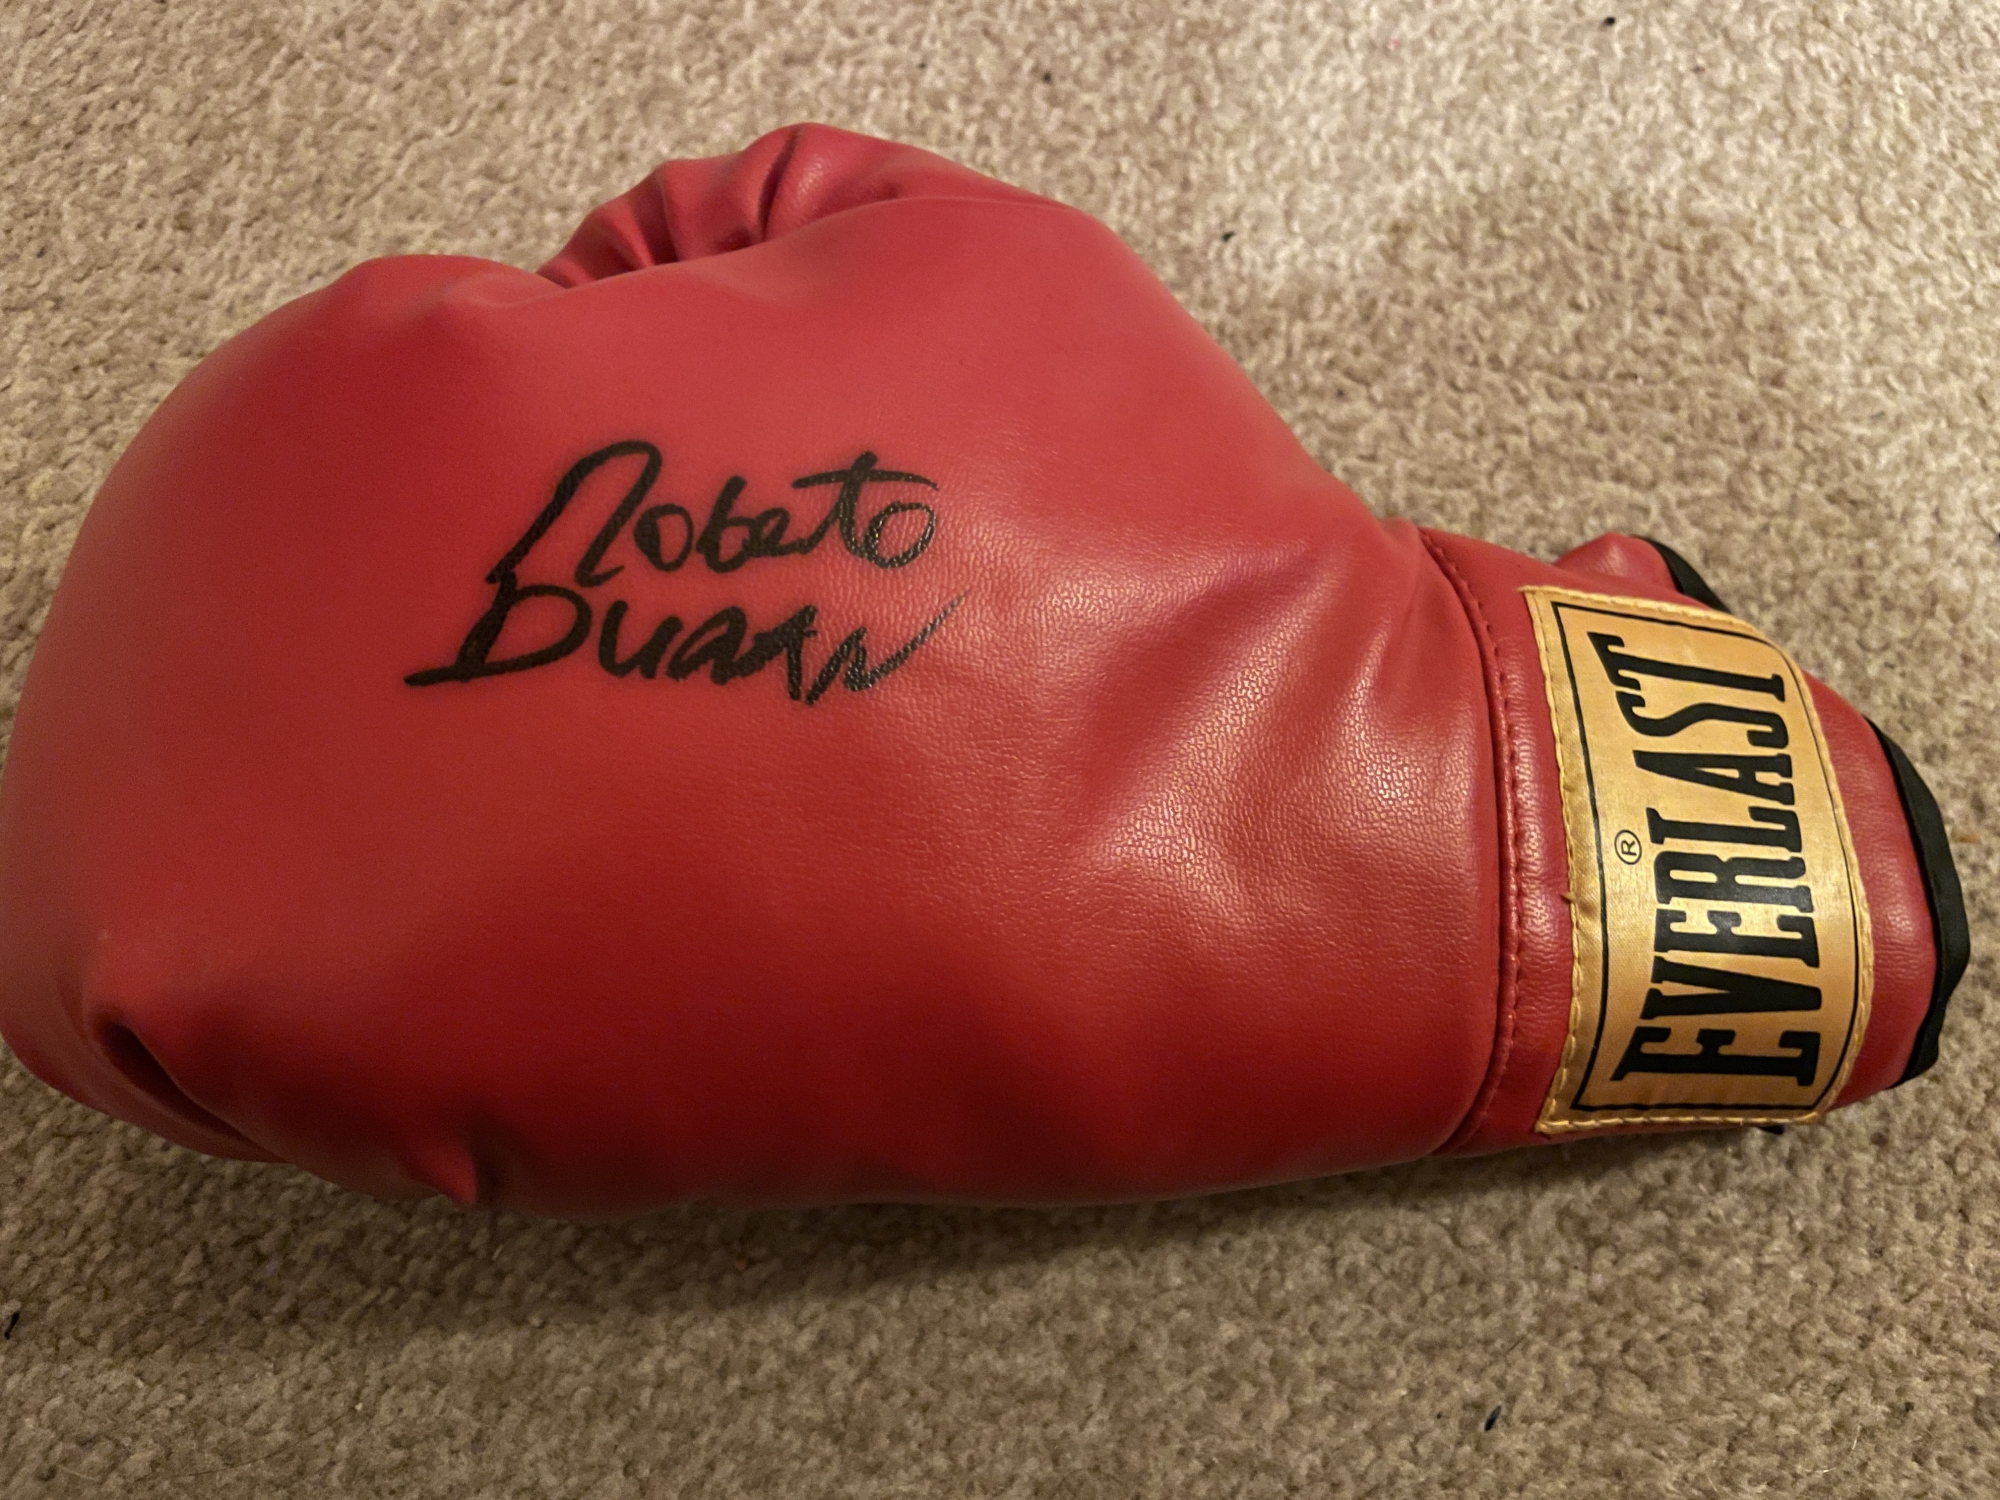 Signed Robert Duran Boxing Glove